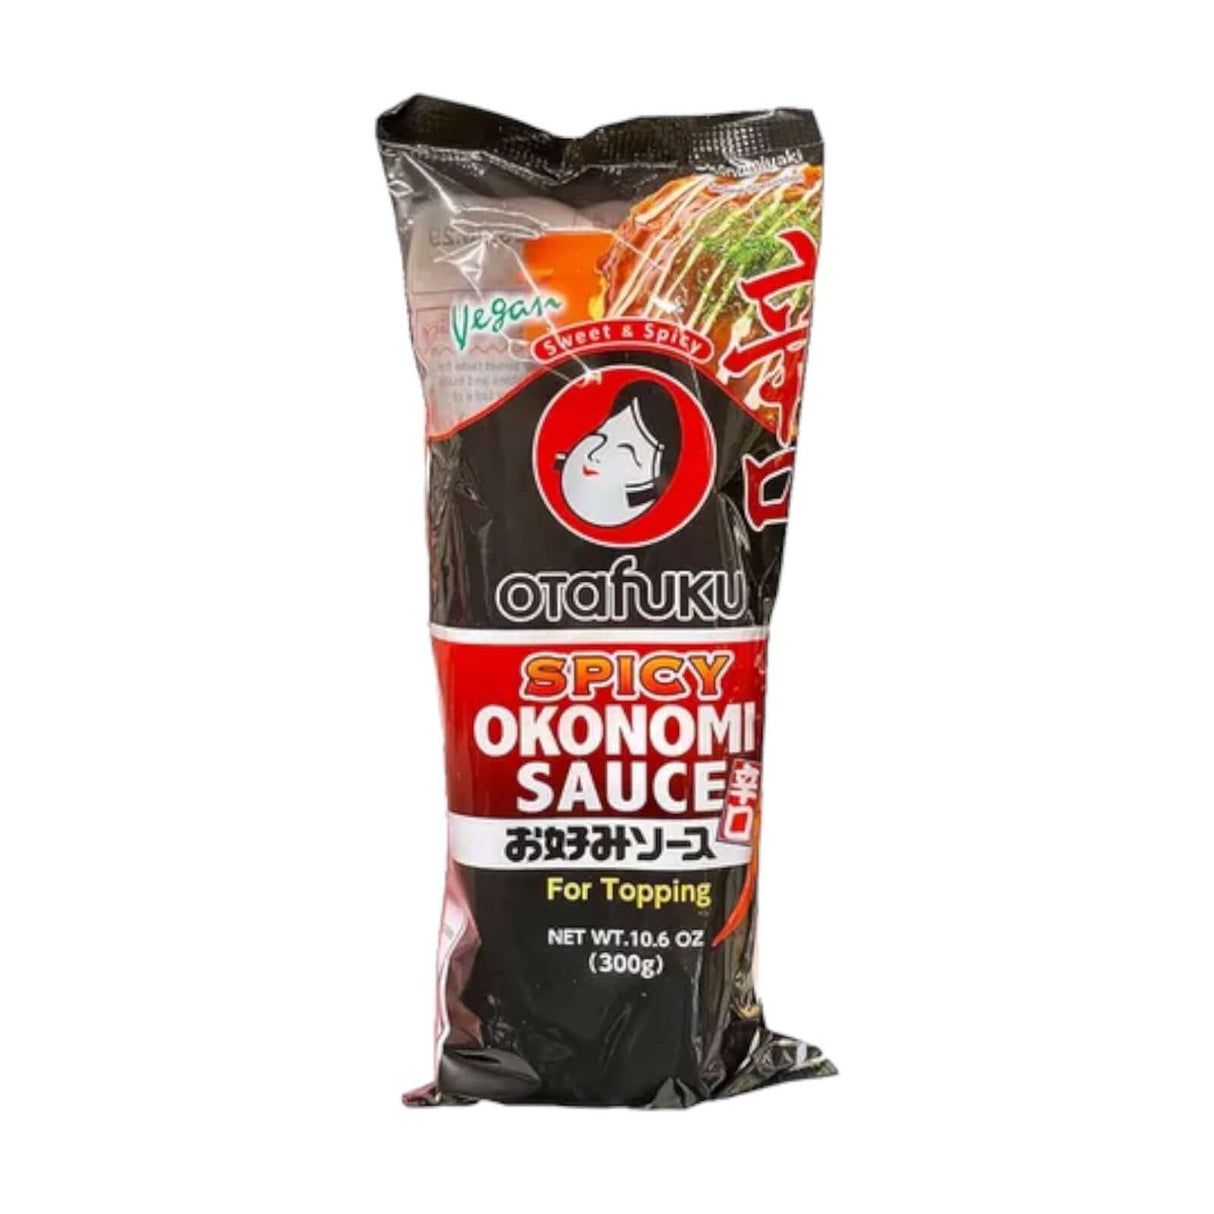 Otafuku Spicy Okonomi Sauce For Dipping